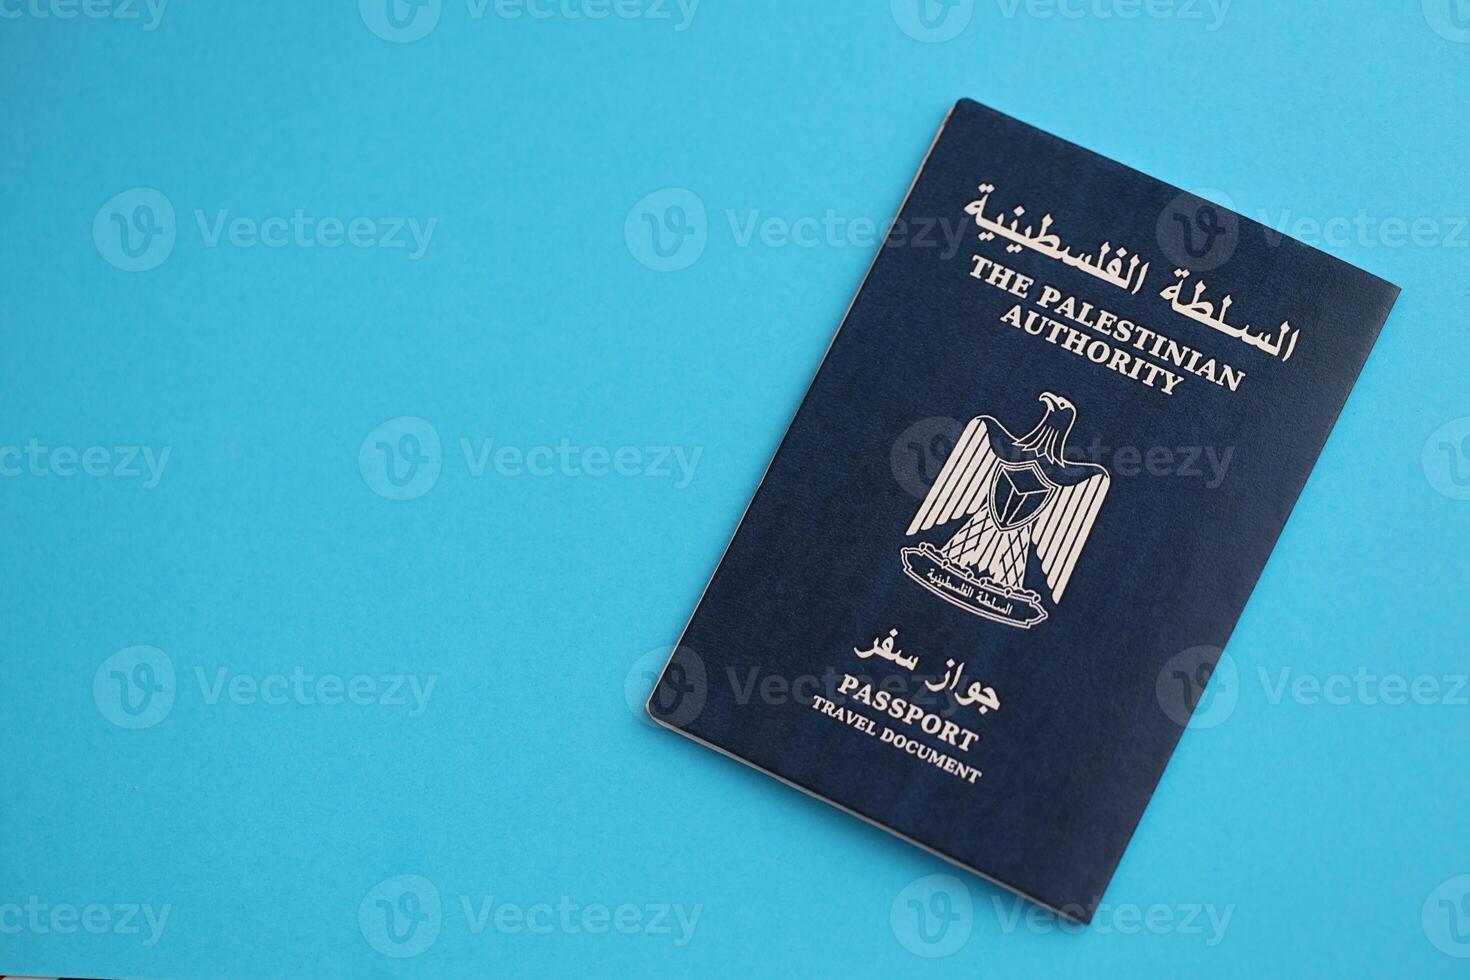 Blue Palestinian Authority passport on blue background close up photo